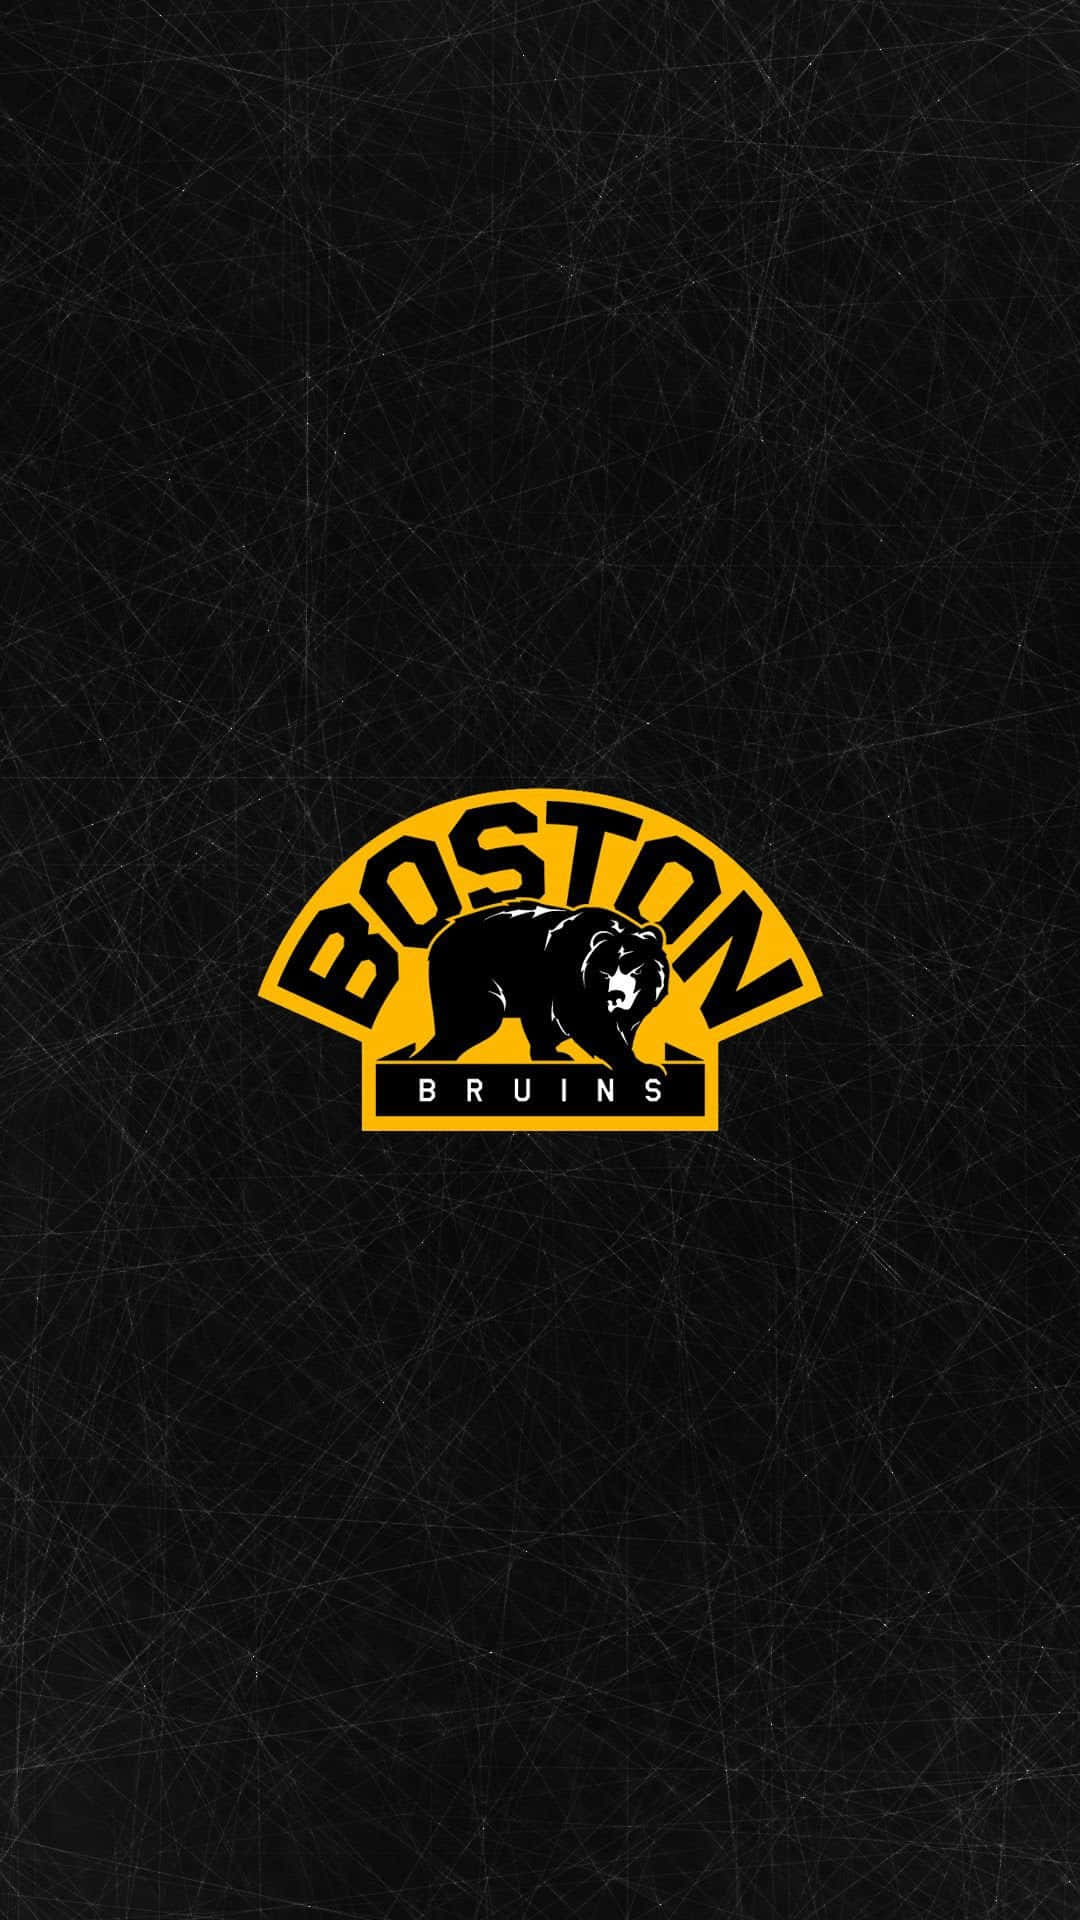 Boston Bruins (NHL) iPhone X/XS/XR Home Screen Wallpaper